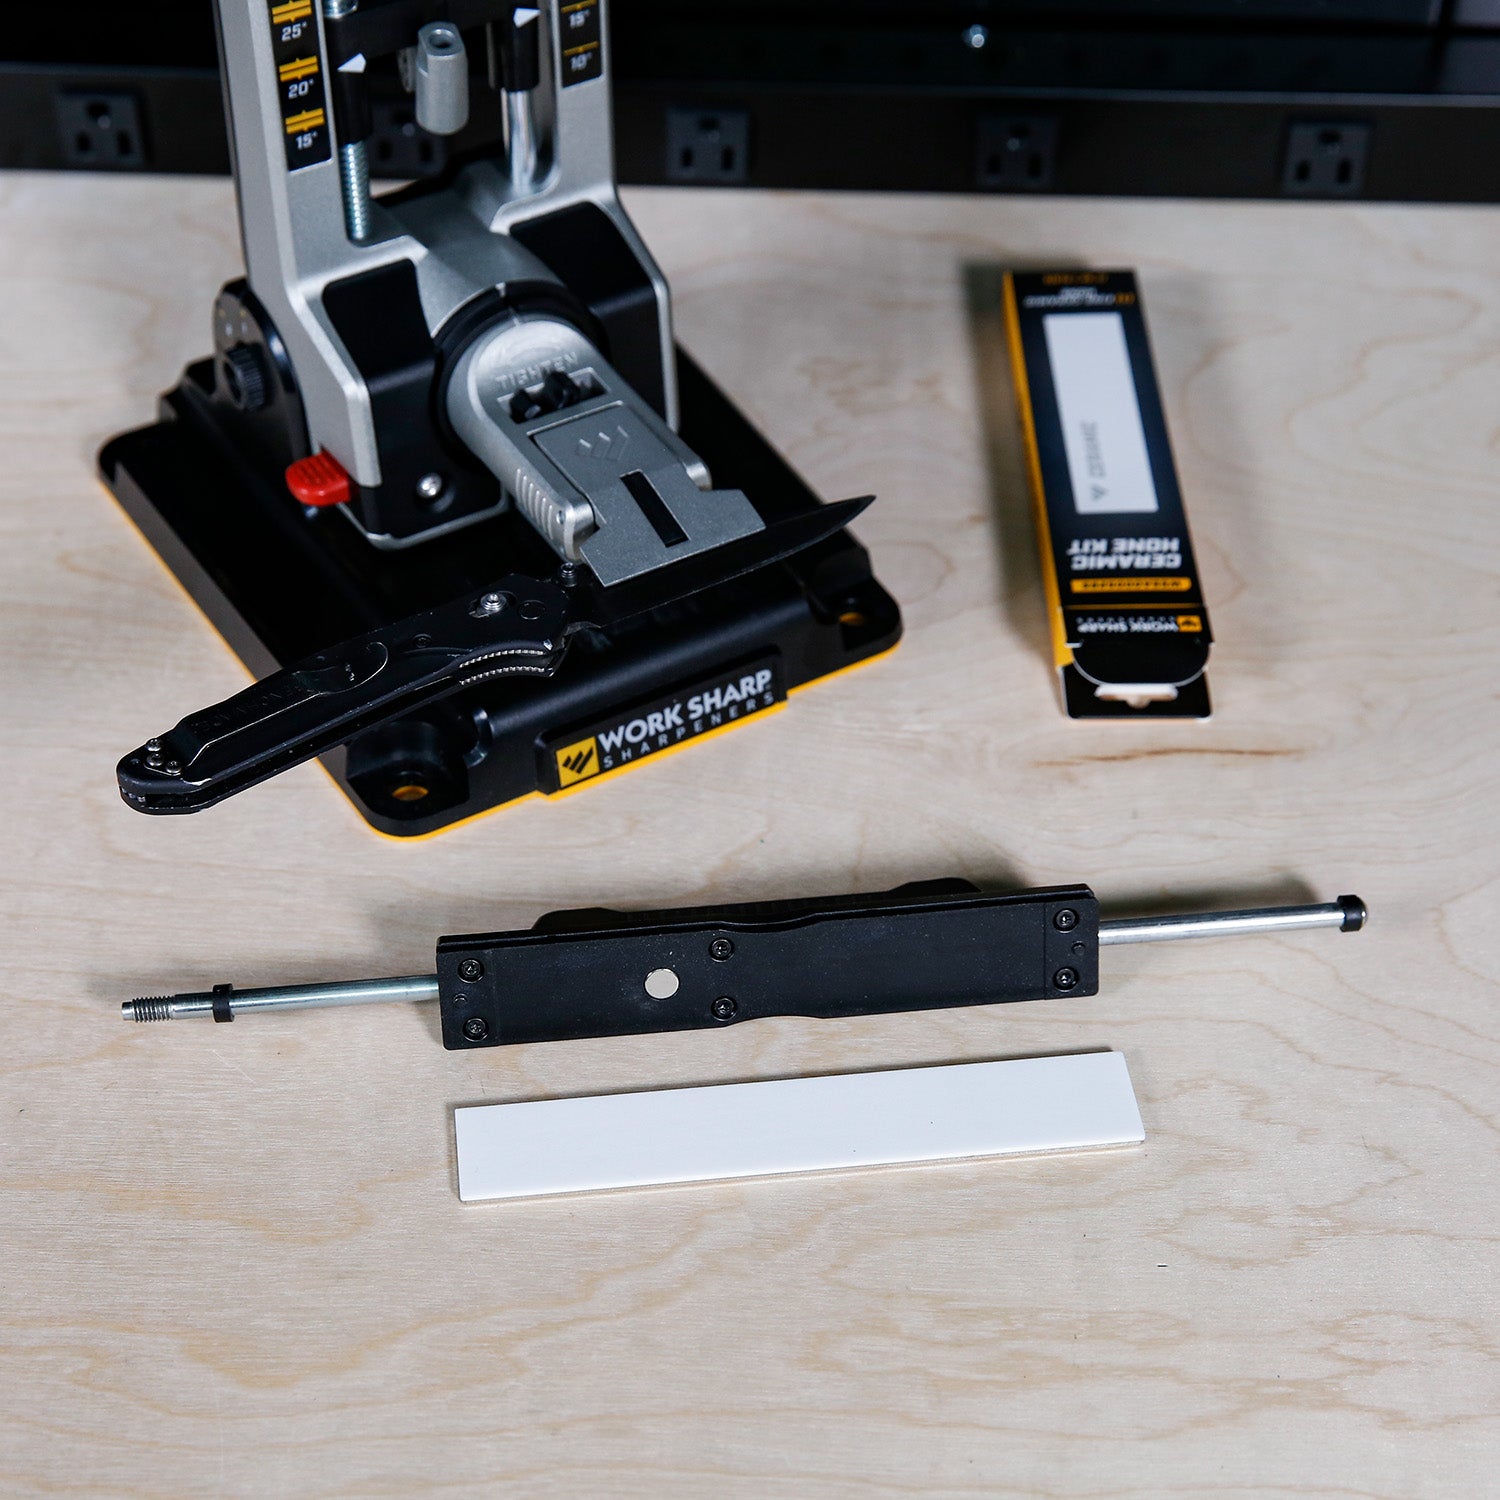  Work Sharp Professional Precision Adjust Ceramic Hone Kit :  Tools & Home Improvement